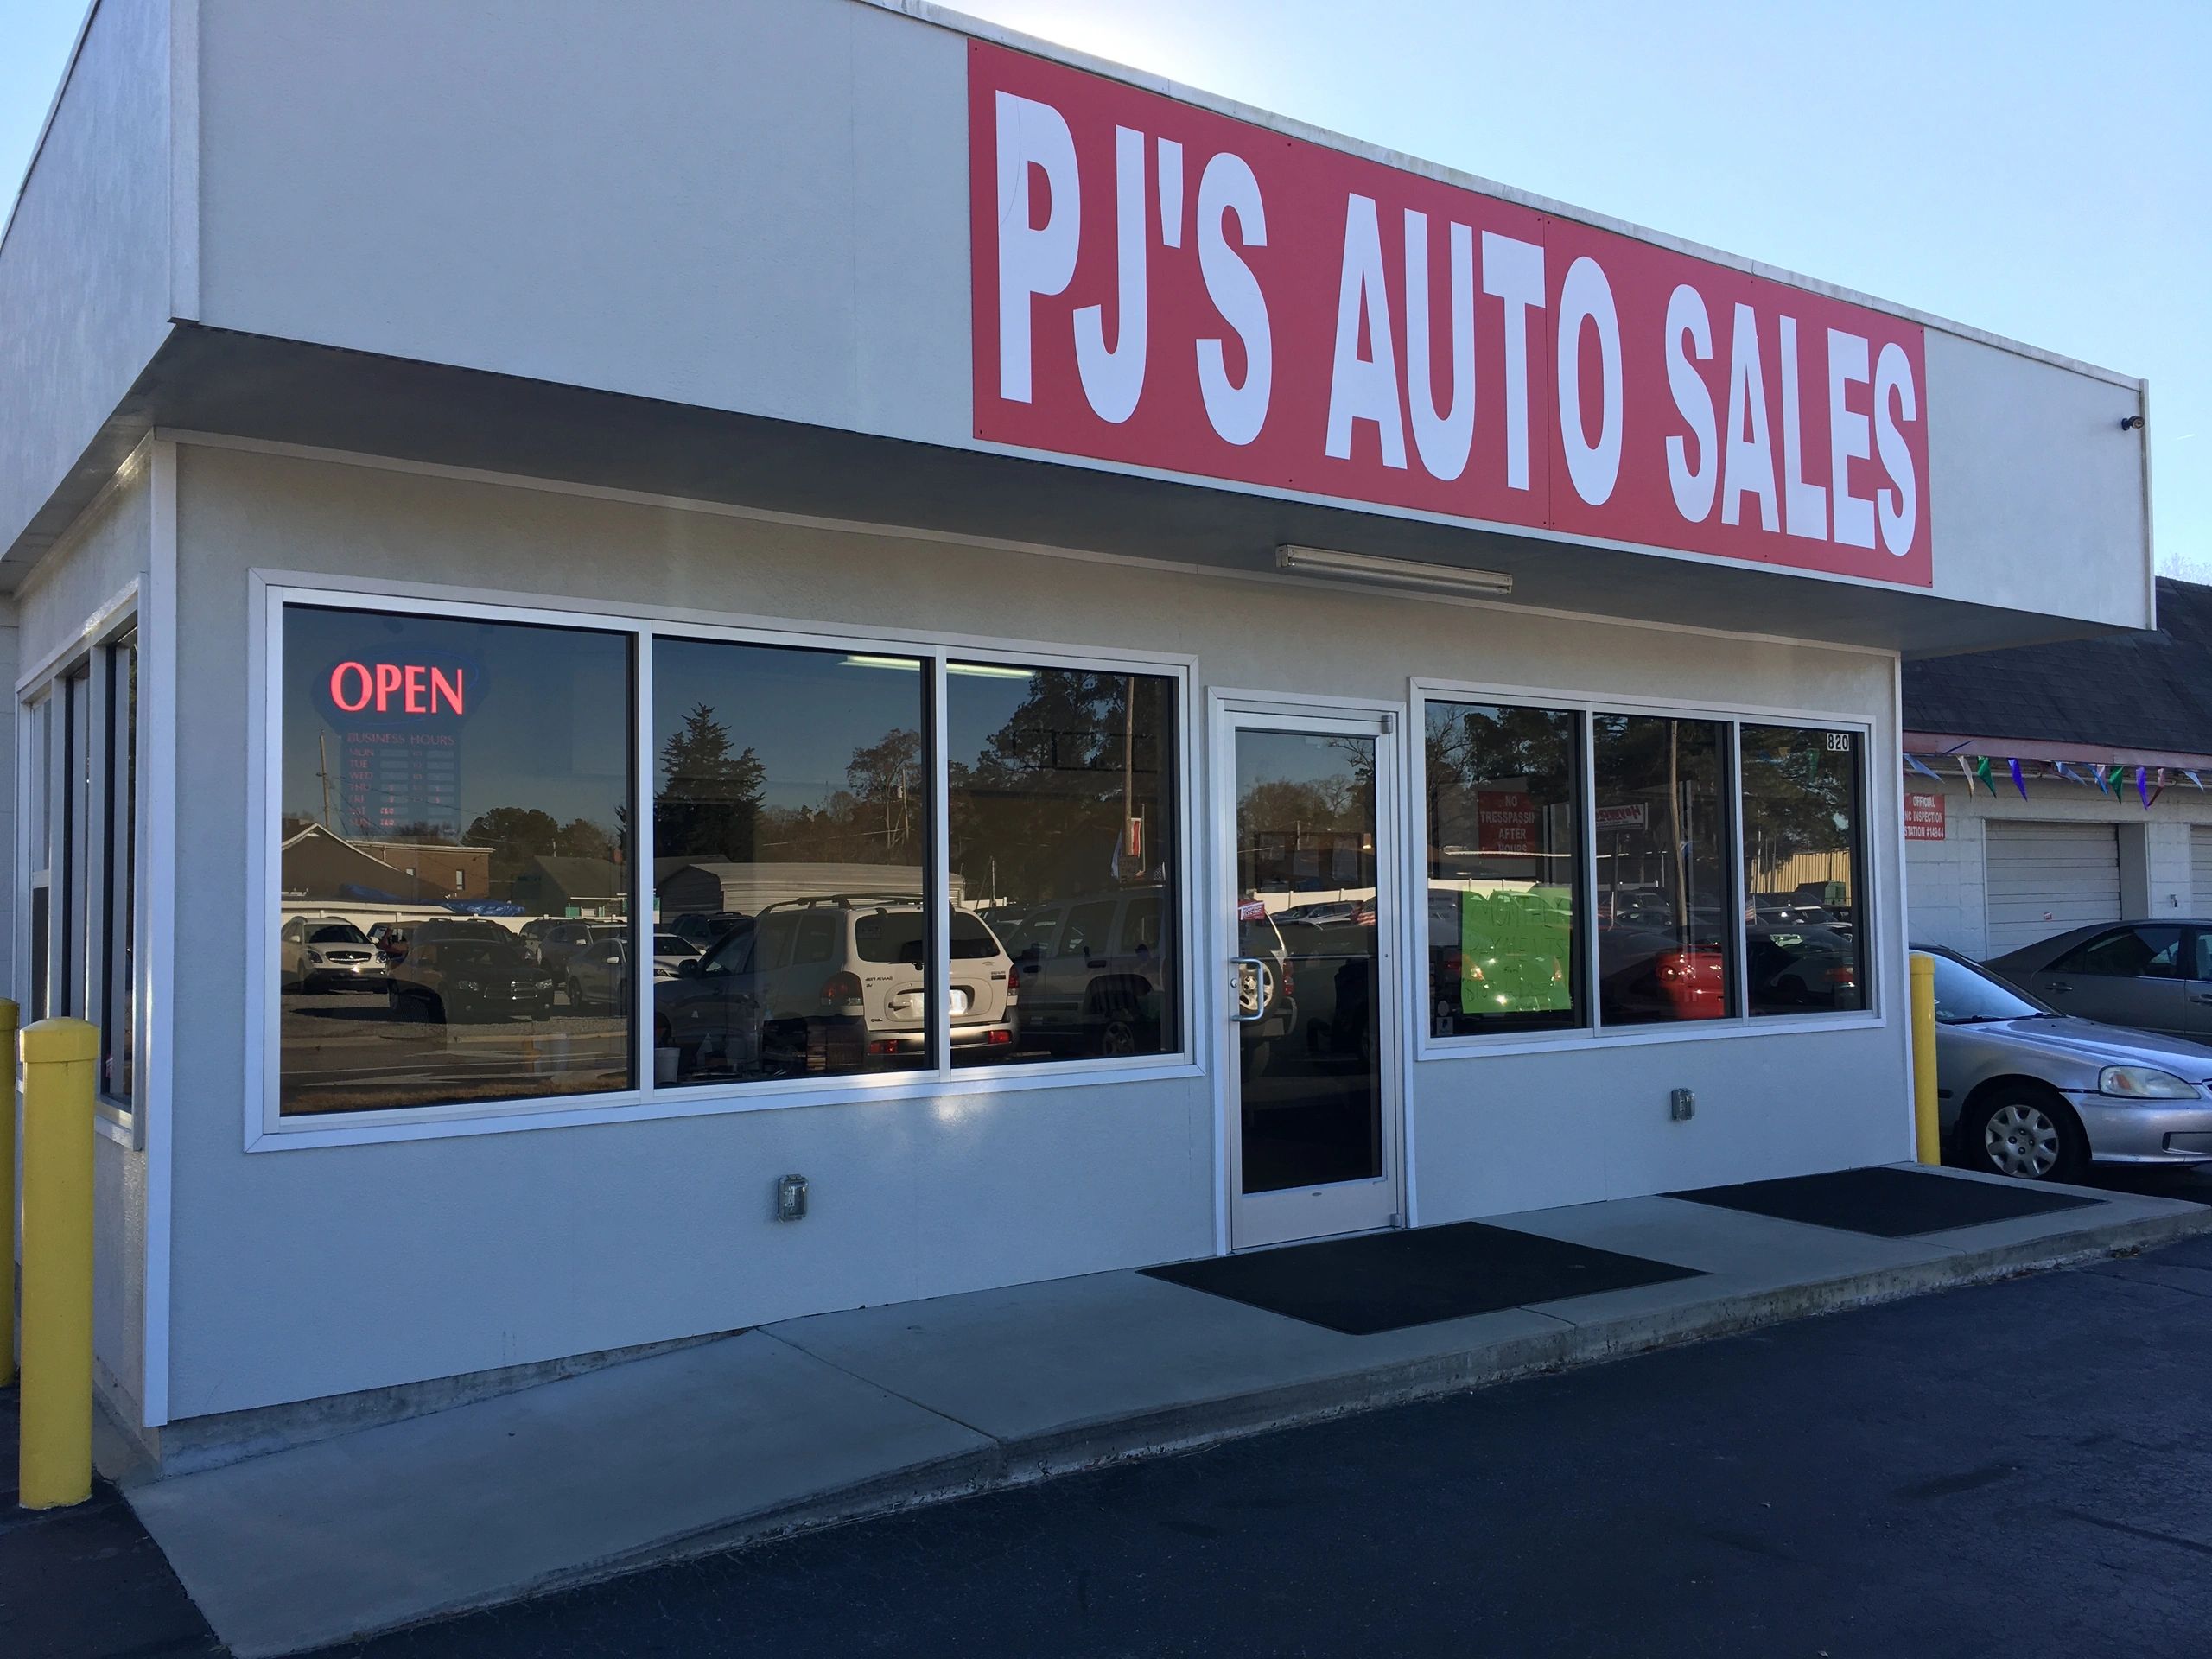 PJ's Auto Sales in Lumberton, North Carolina